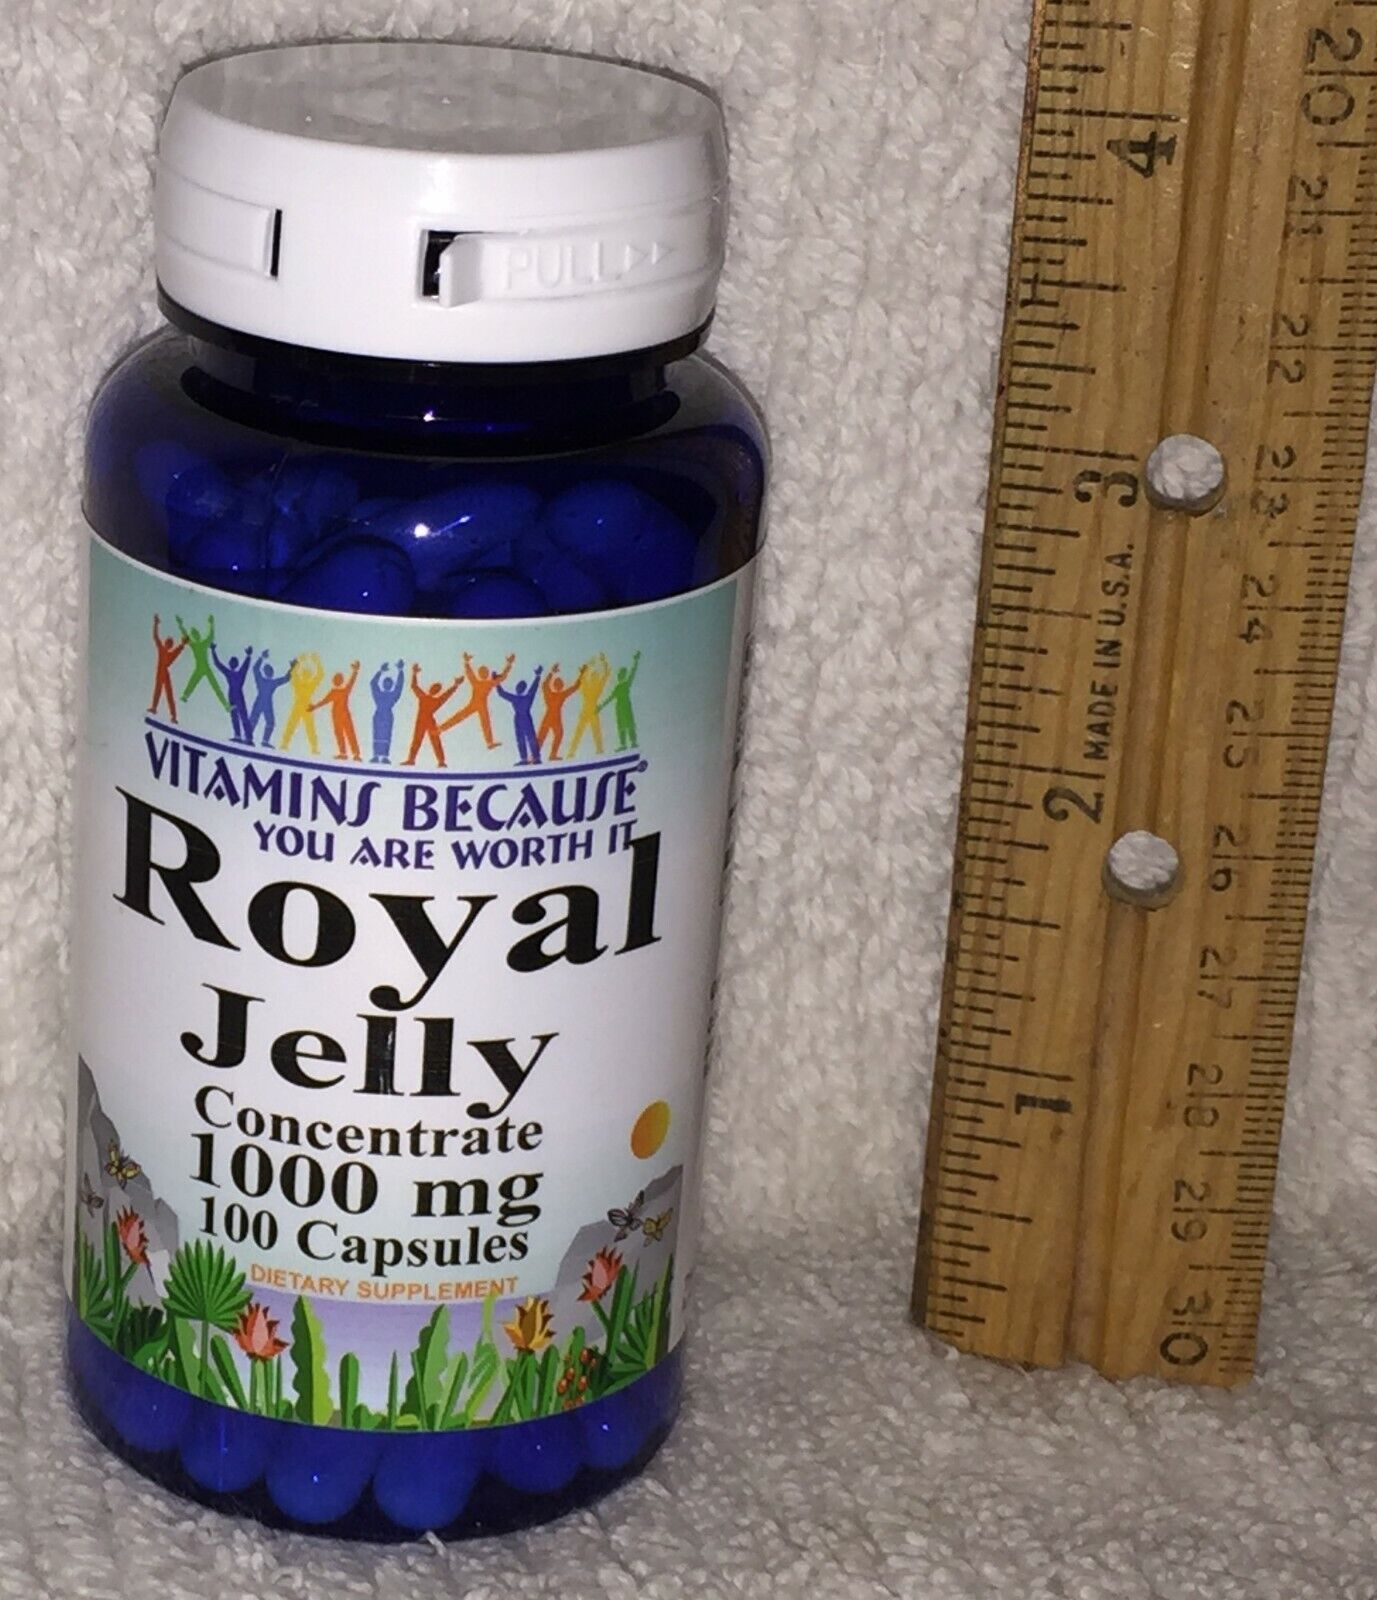 Royal Jelly Concentrate / Vitamins Because NO PRESERVATIVES, 1000 mg, 100 caps